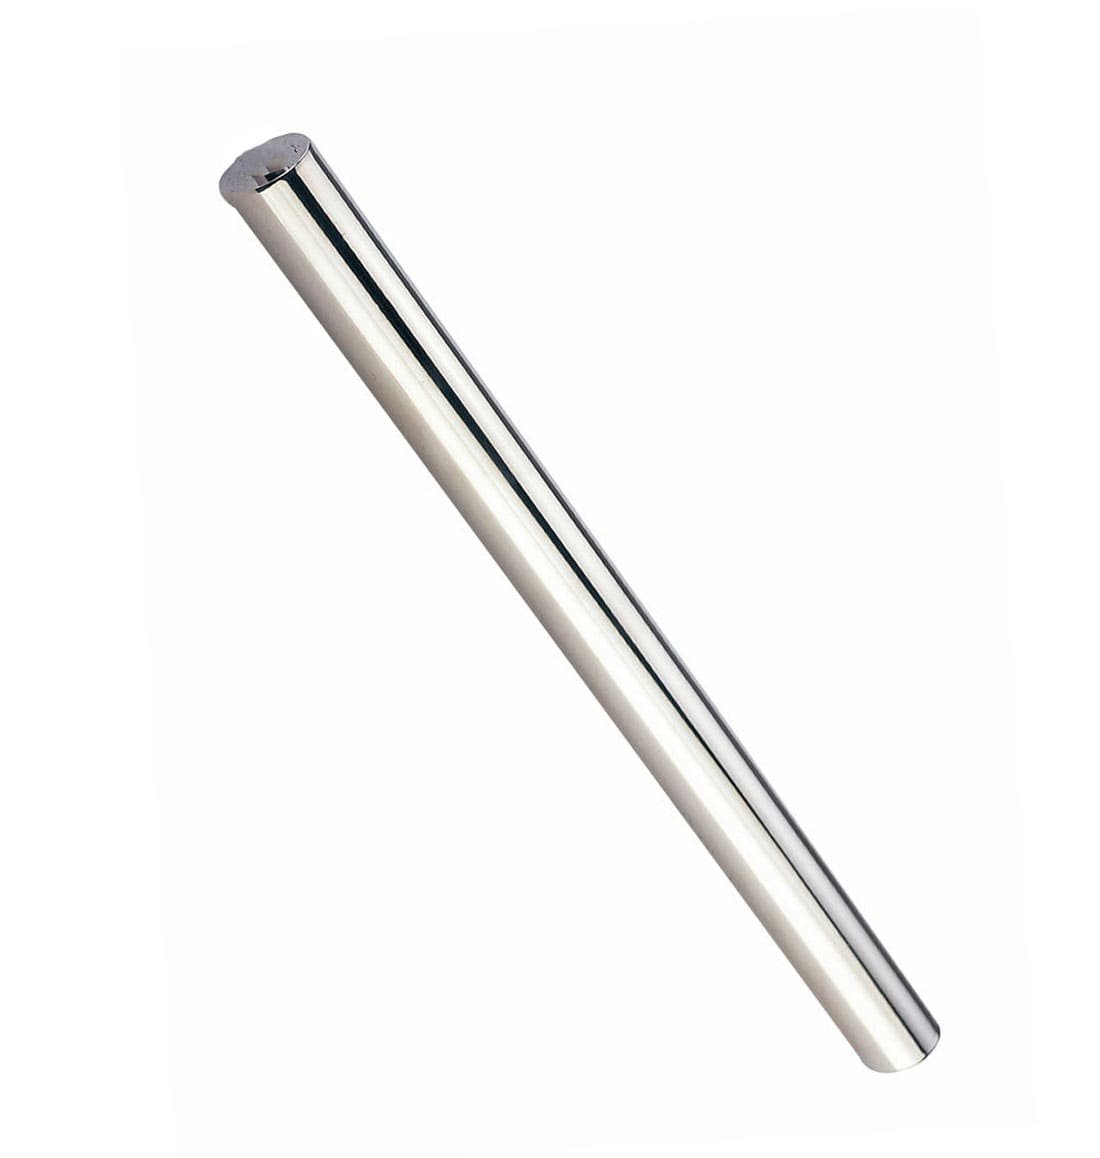 Stainless Steel Rod 12mm/12inch - RajaBanNaHai Stainless Steel Rod For Sale Near Me